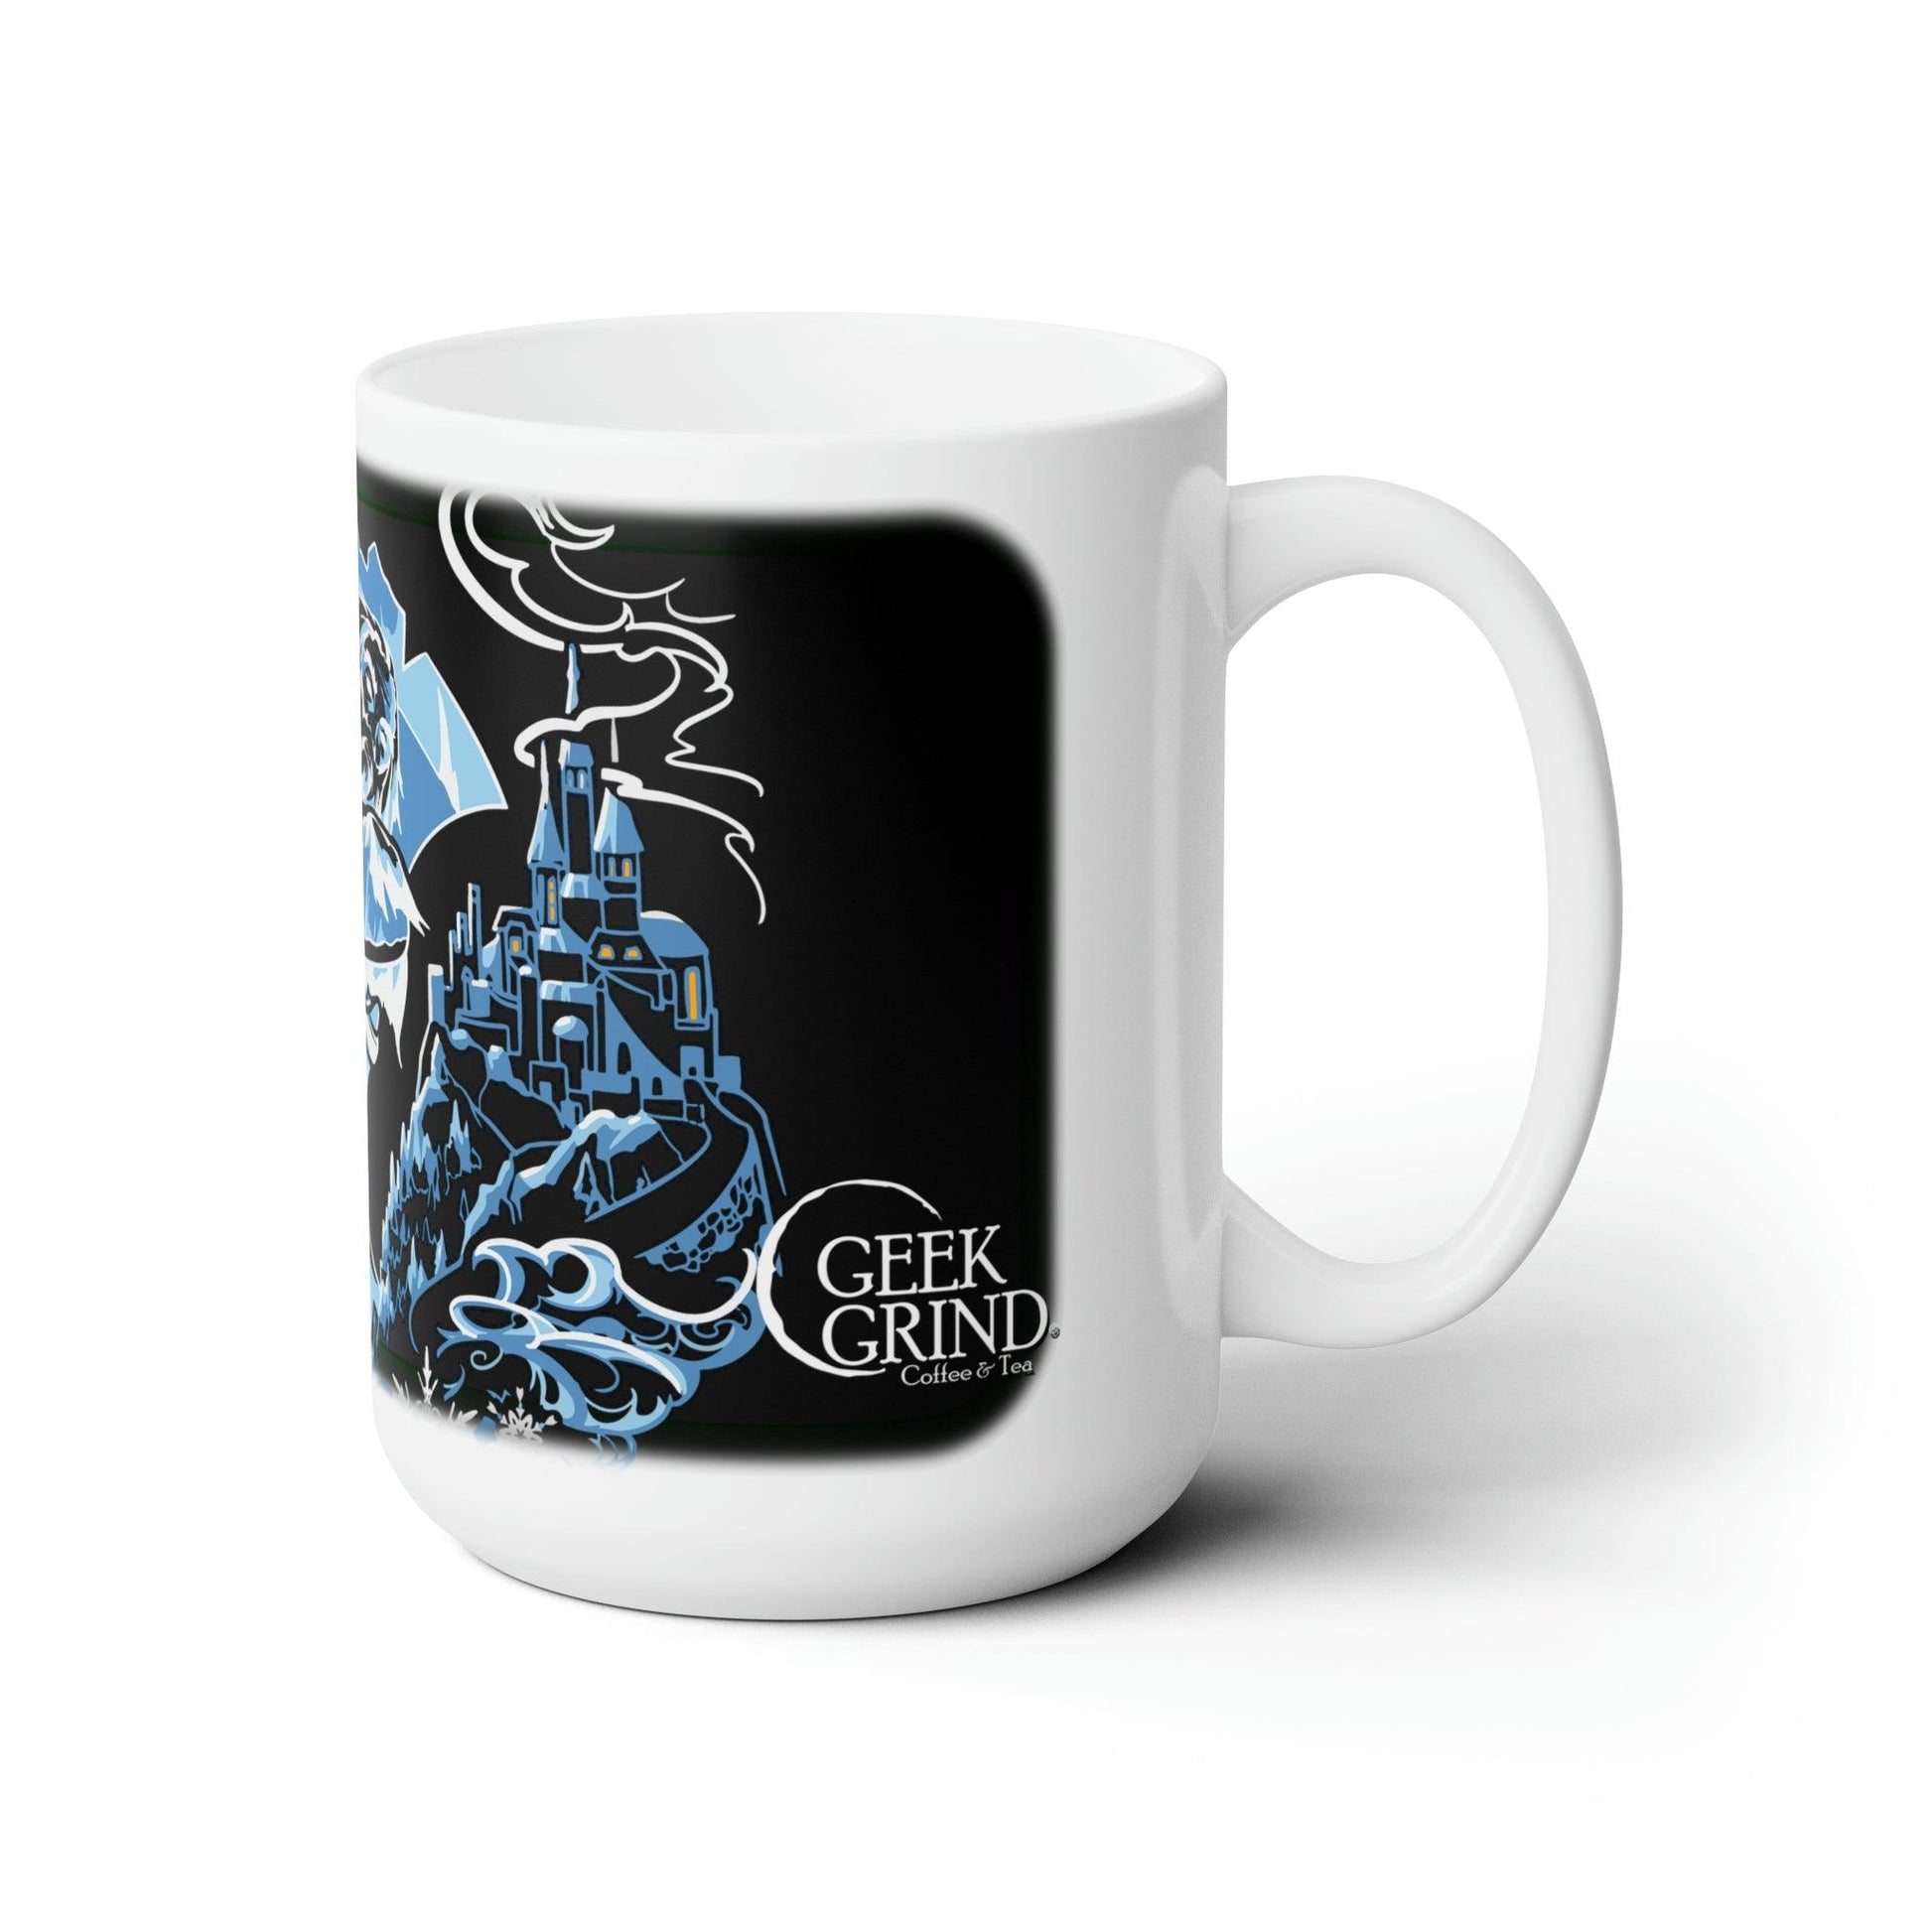 Frost Giant Mug - Geek Grind Coffee